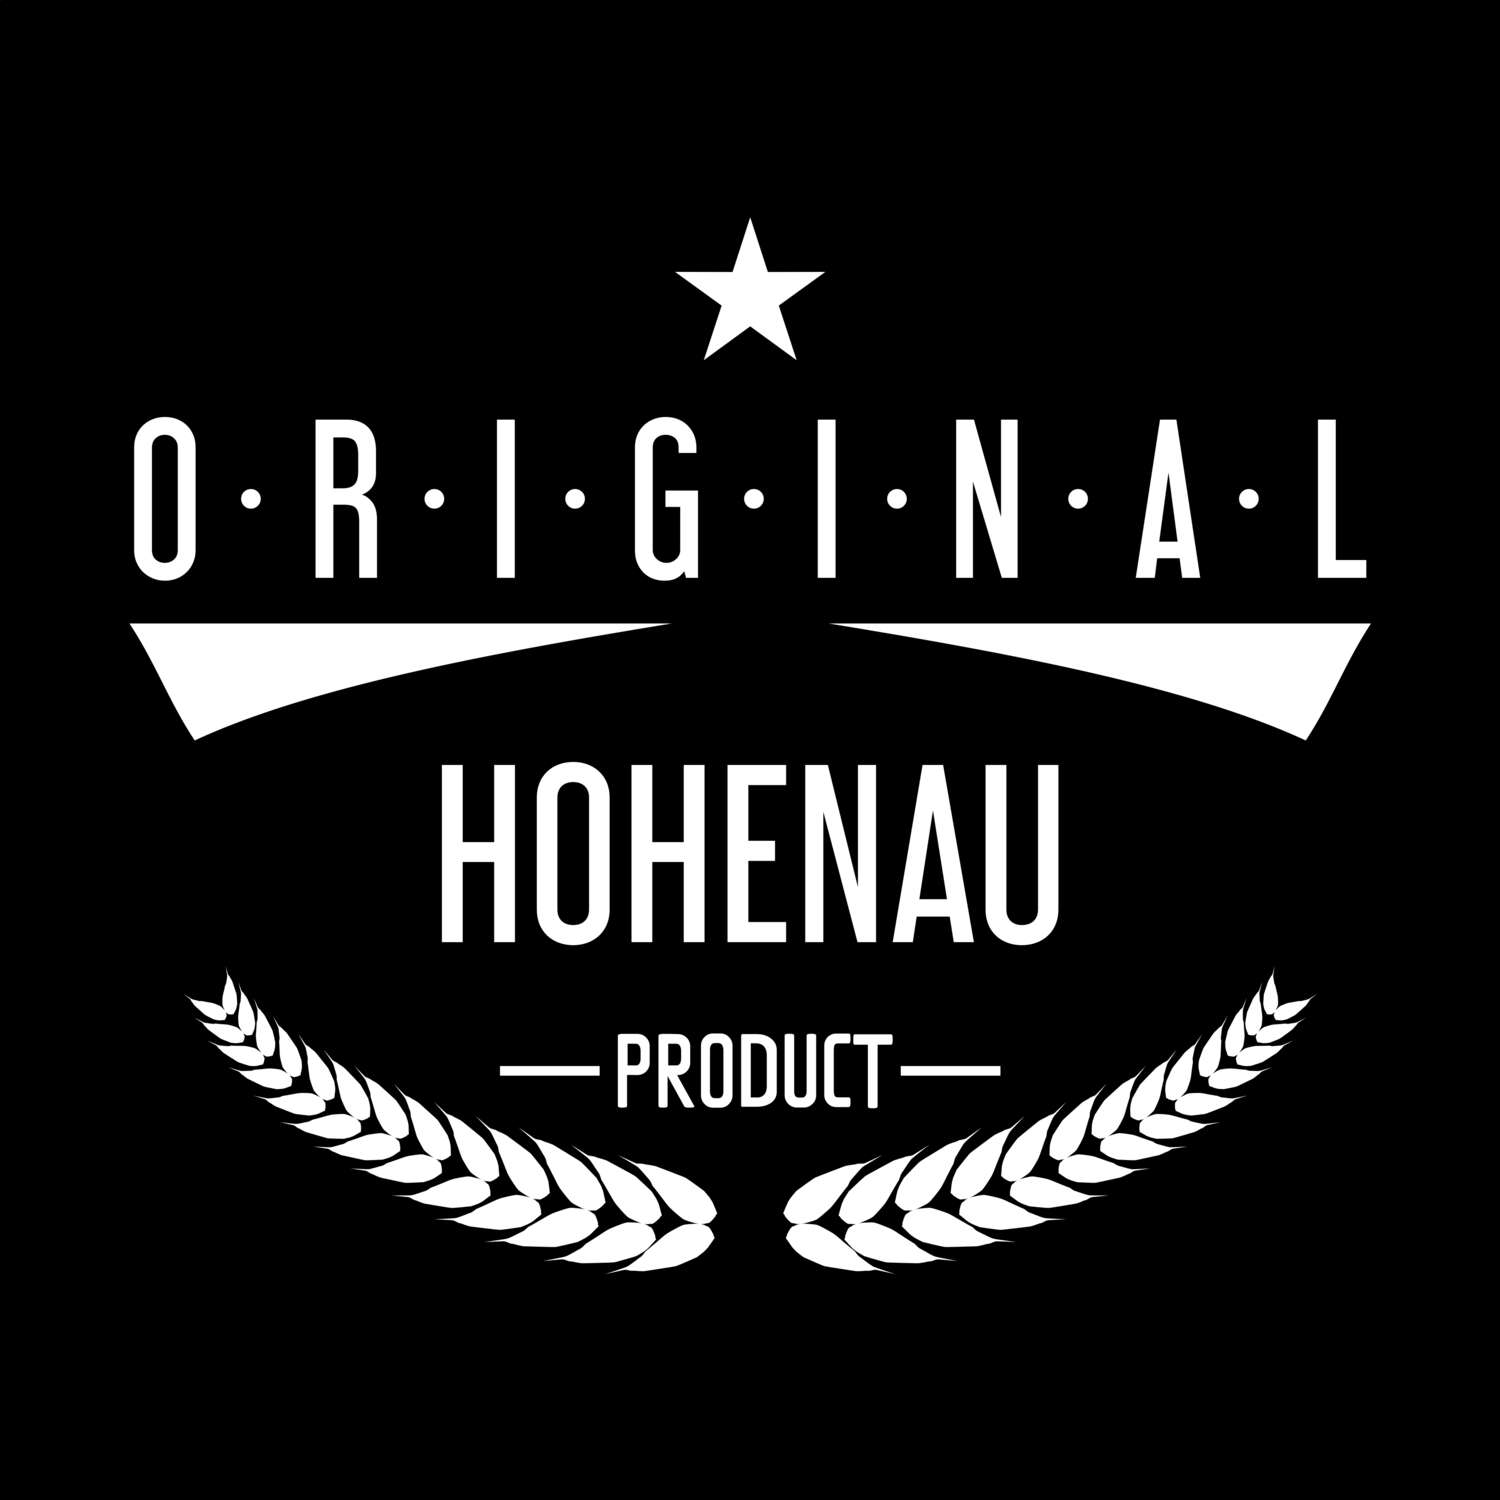 Hohenau T-Shirt »Original Product«